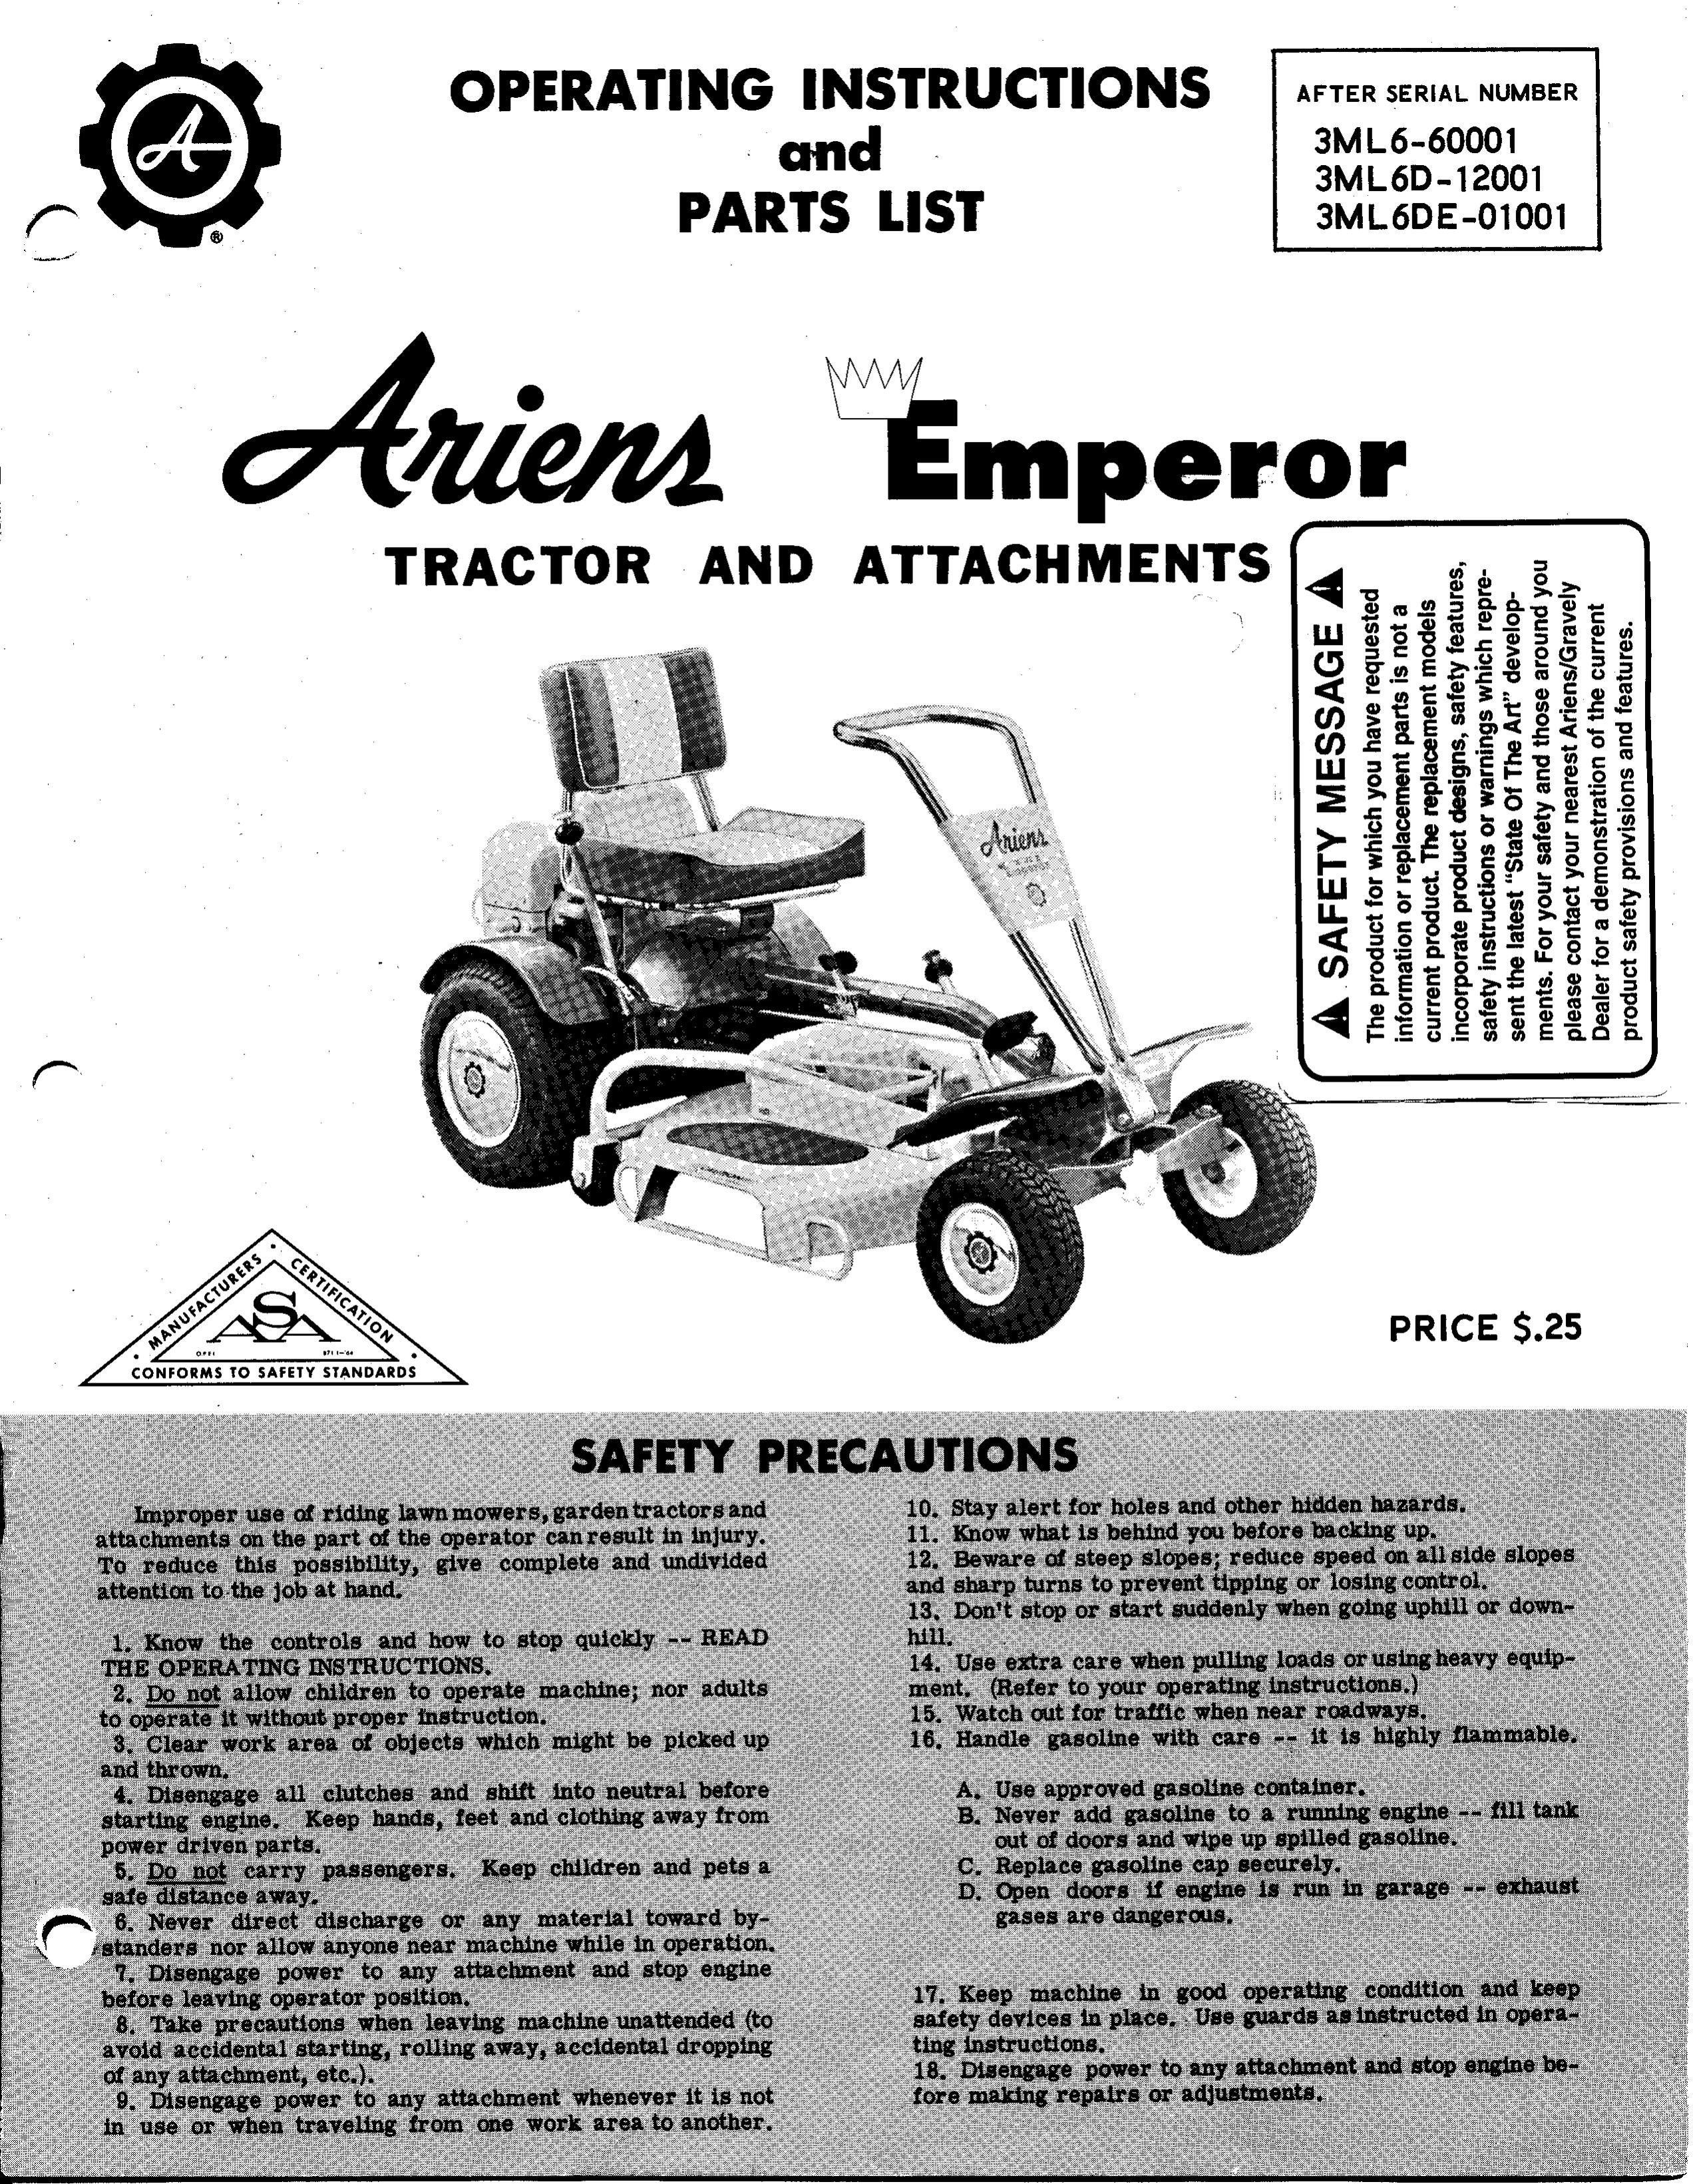 Ariens 3ML6D-12001 Lawn Mower User Manual